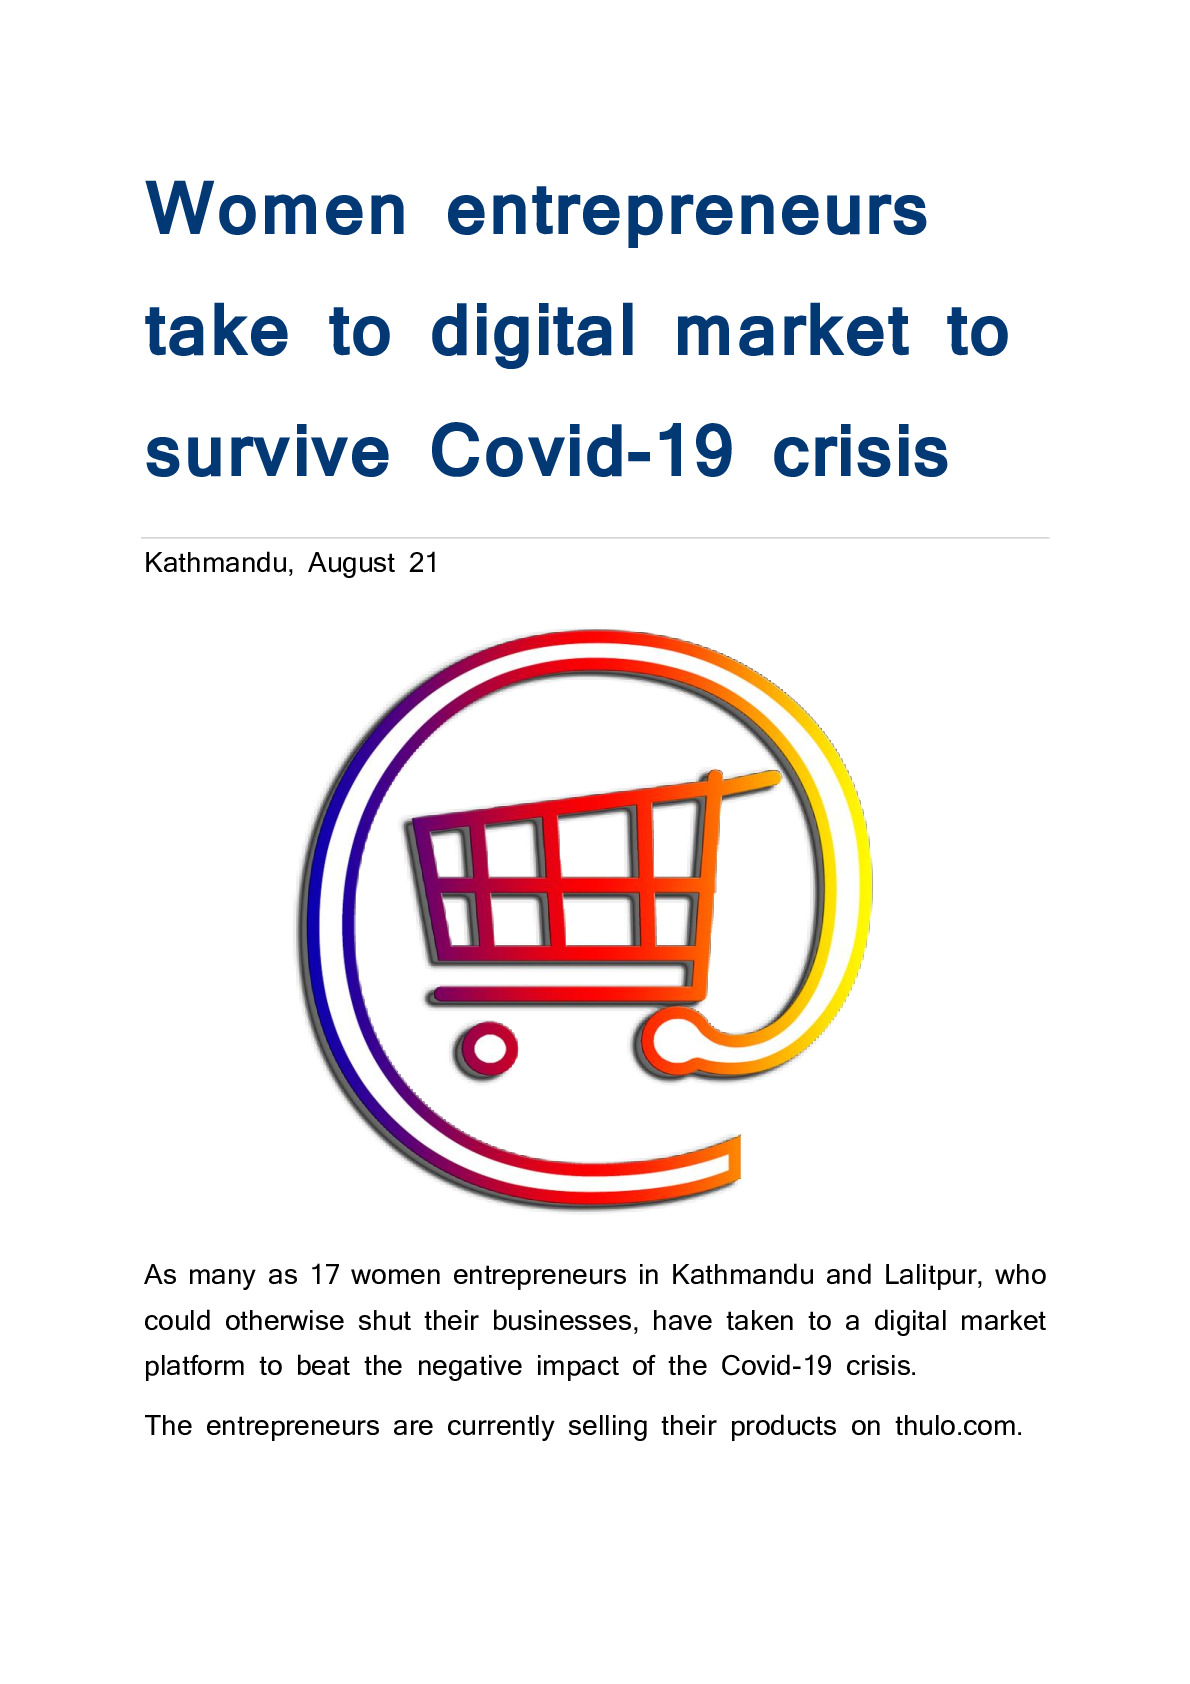 Women entrepreneurs take to digital market to survive Covid-19 crisis